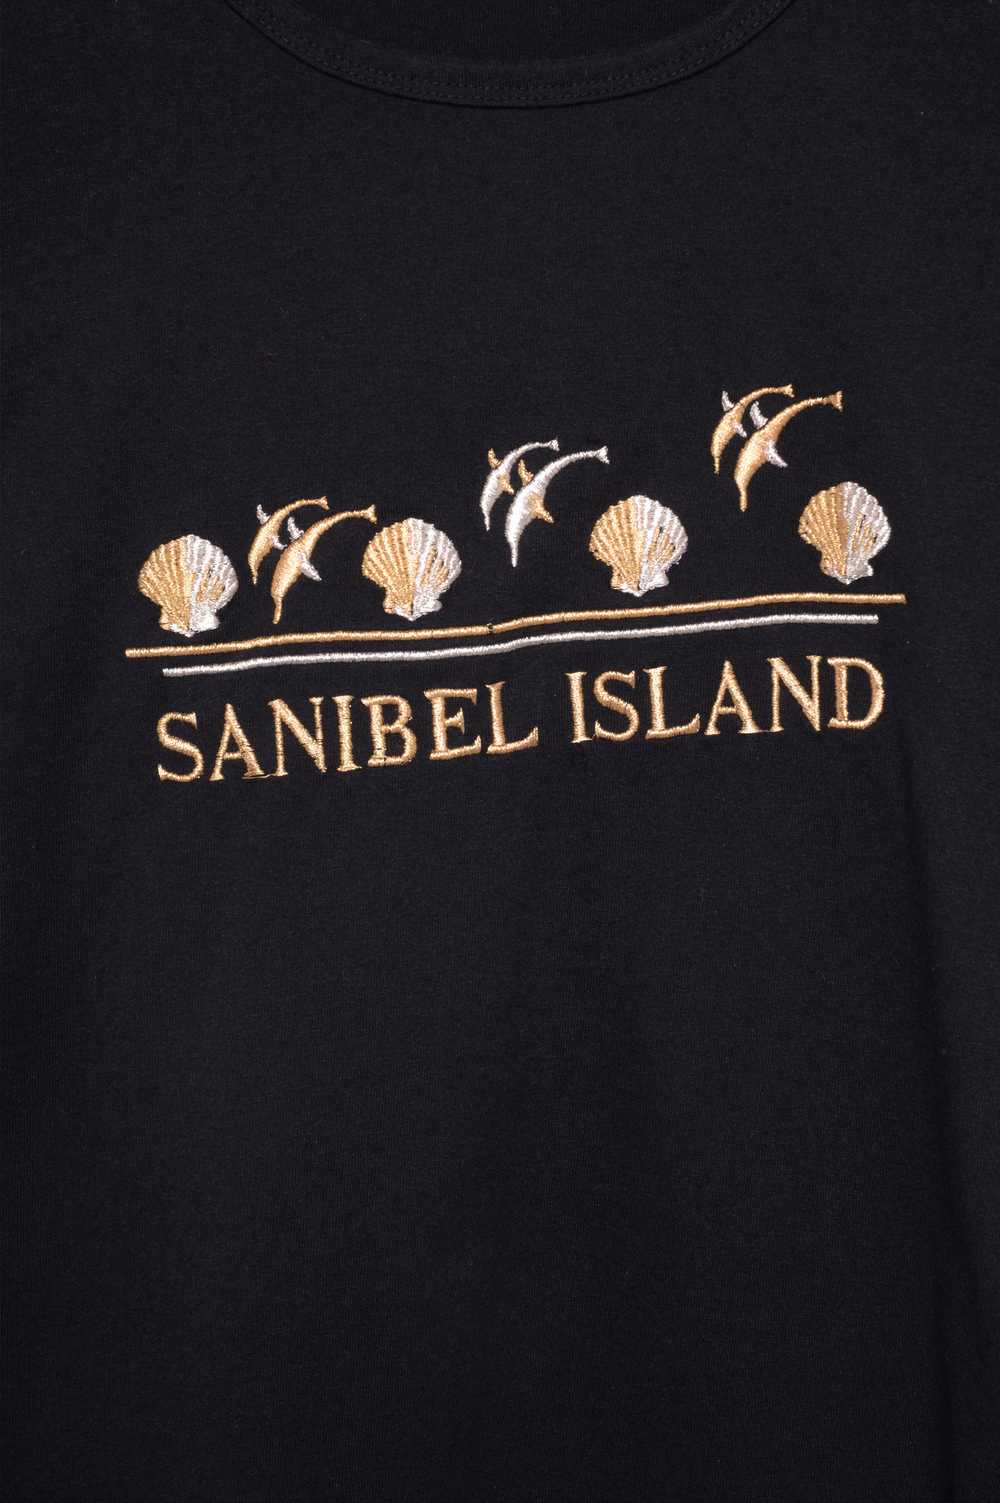 Sanibel Island Beach Tee - image 2